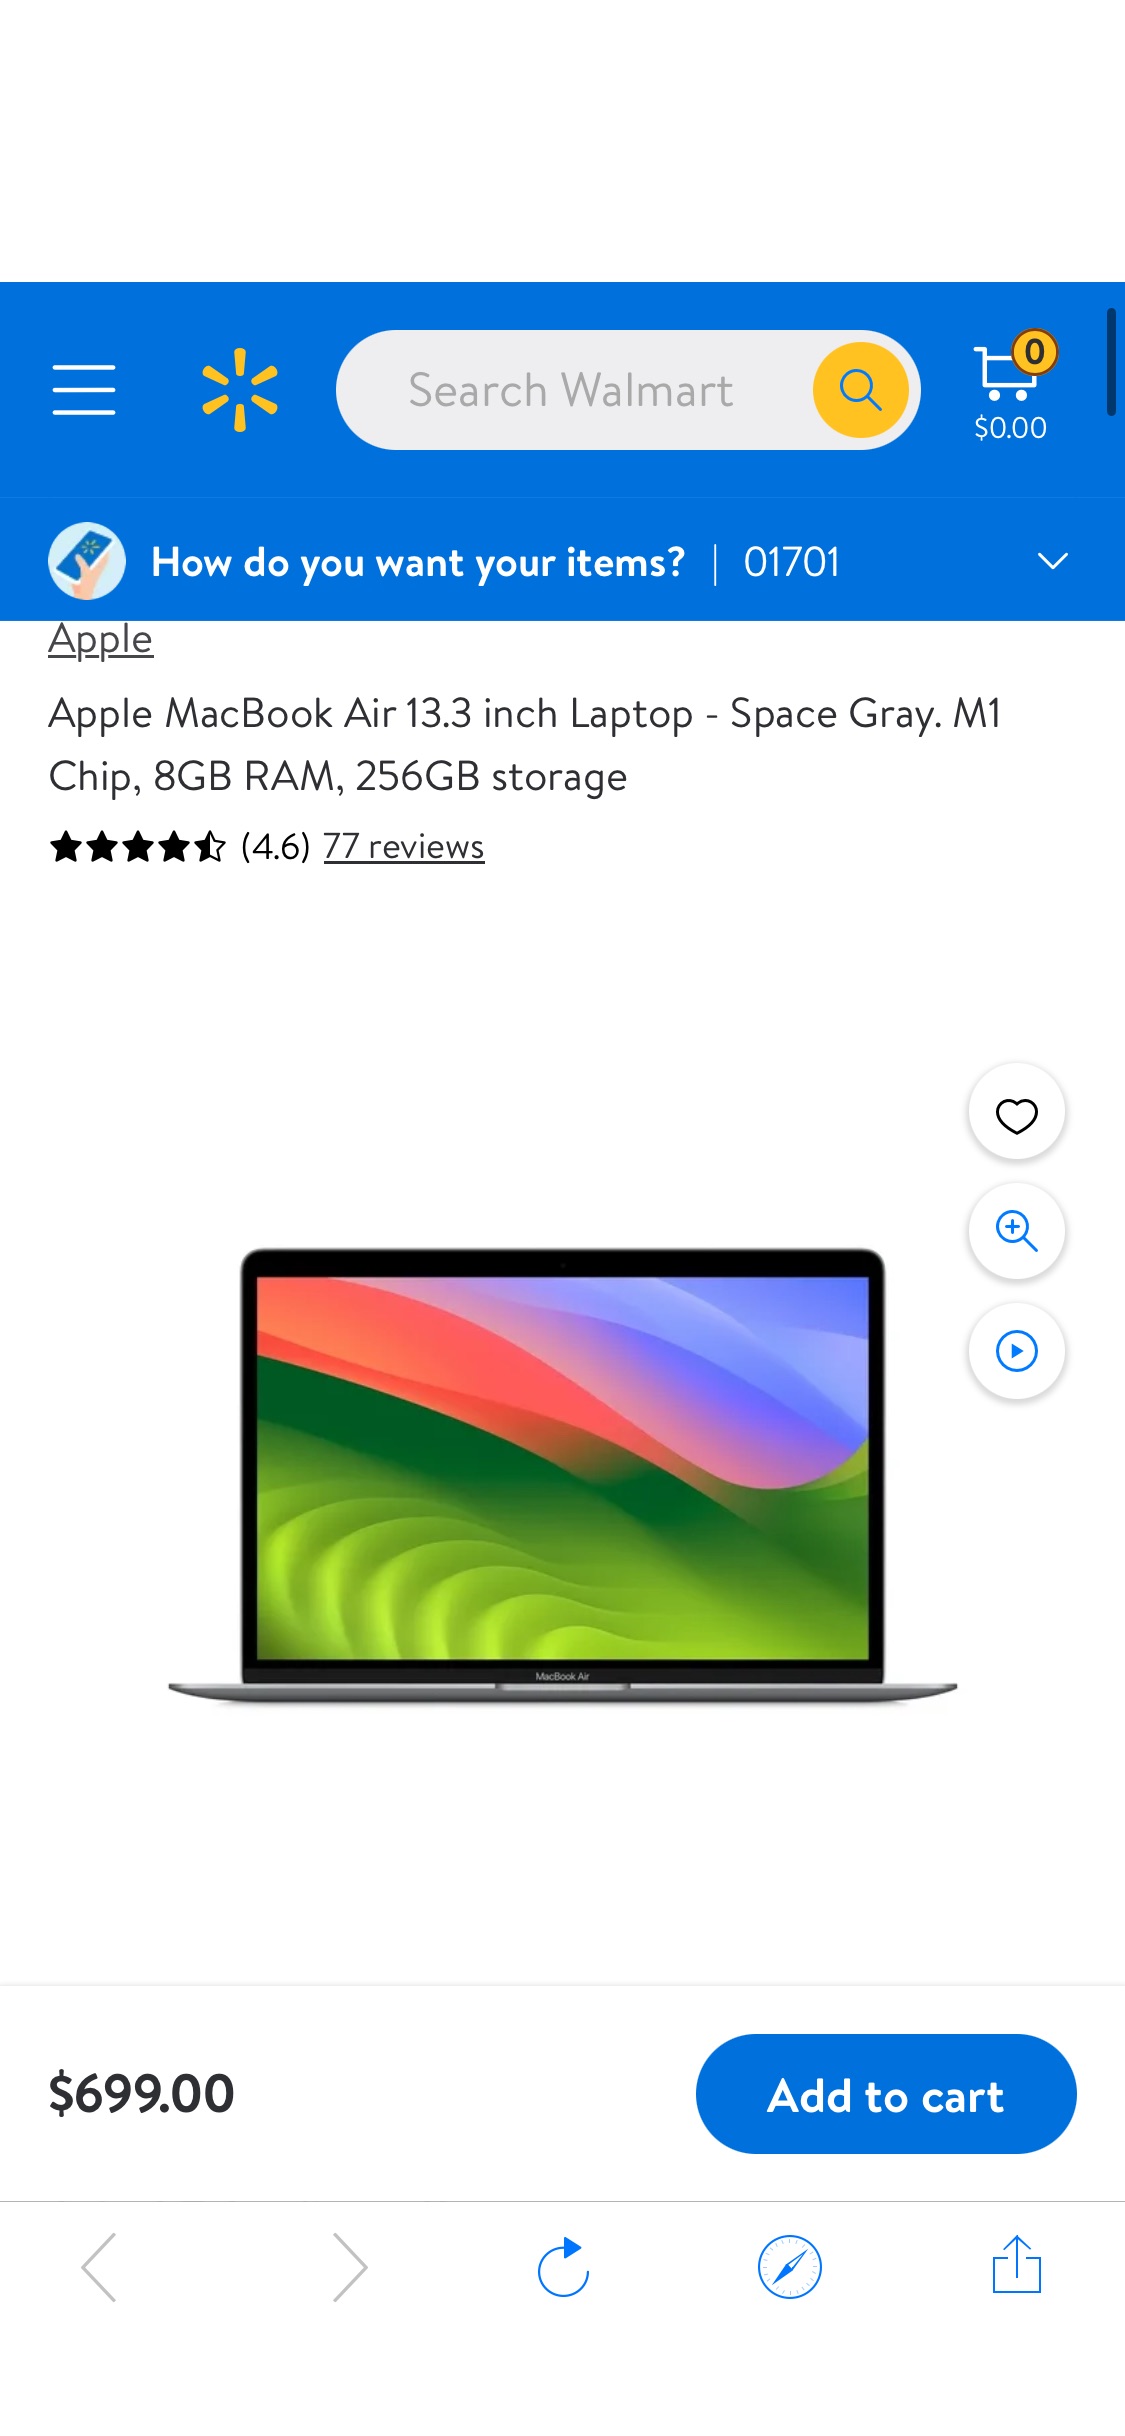 Apple MacBook Air 13.3 inch Laptop - Space Gray. M1 Chip, 8GB RAM, 256GB storage - Walmart.com